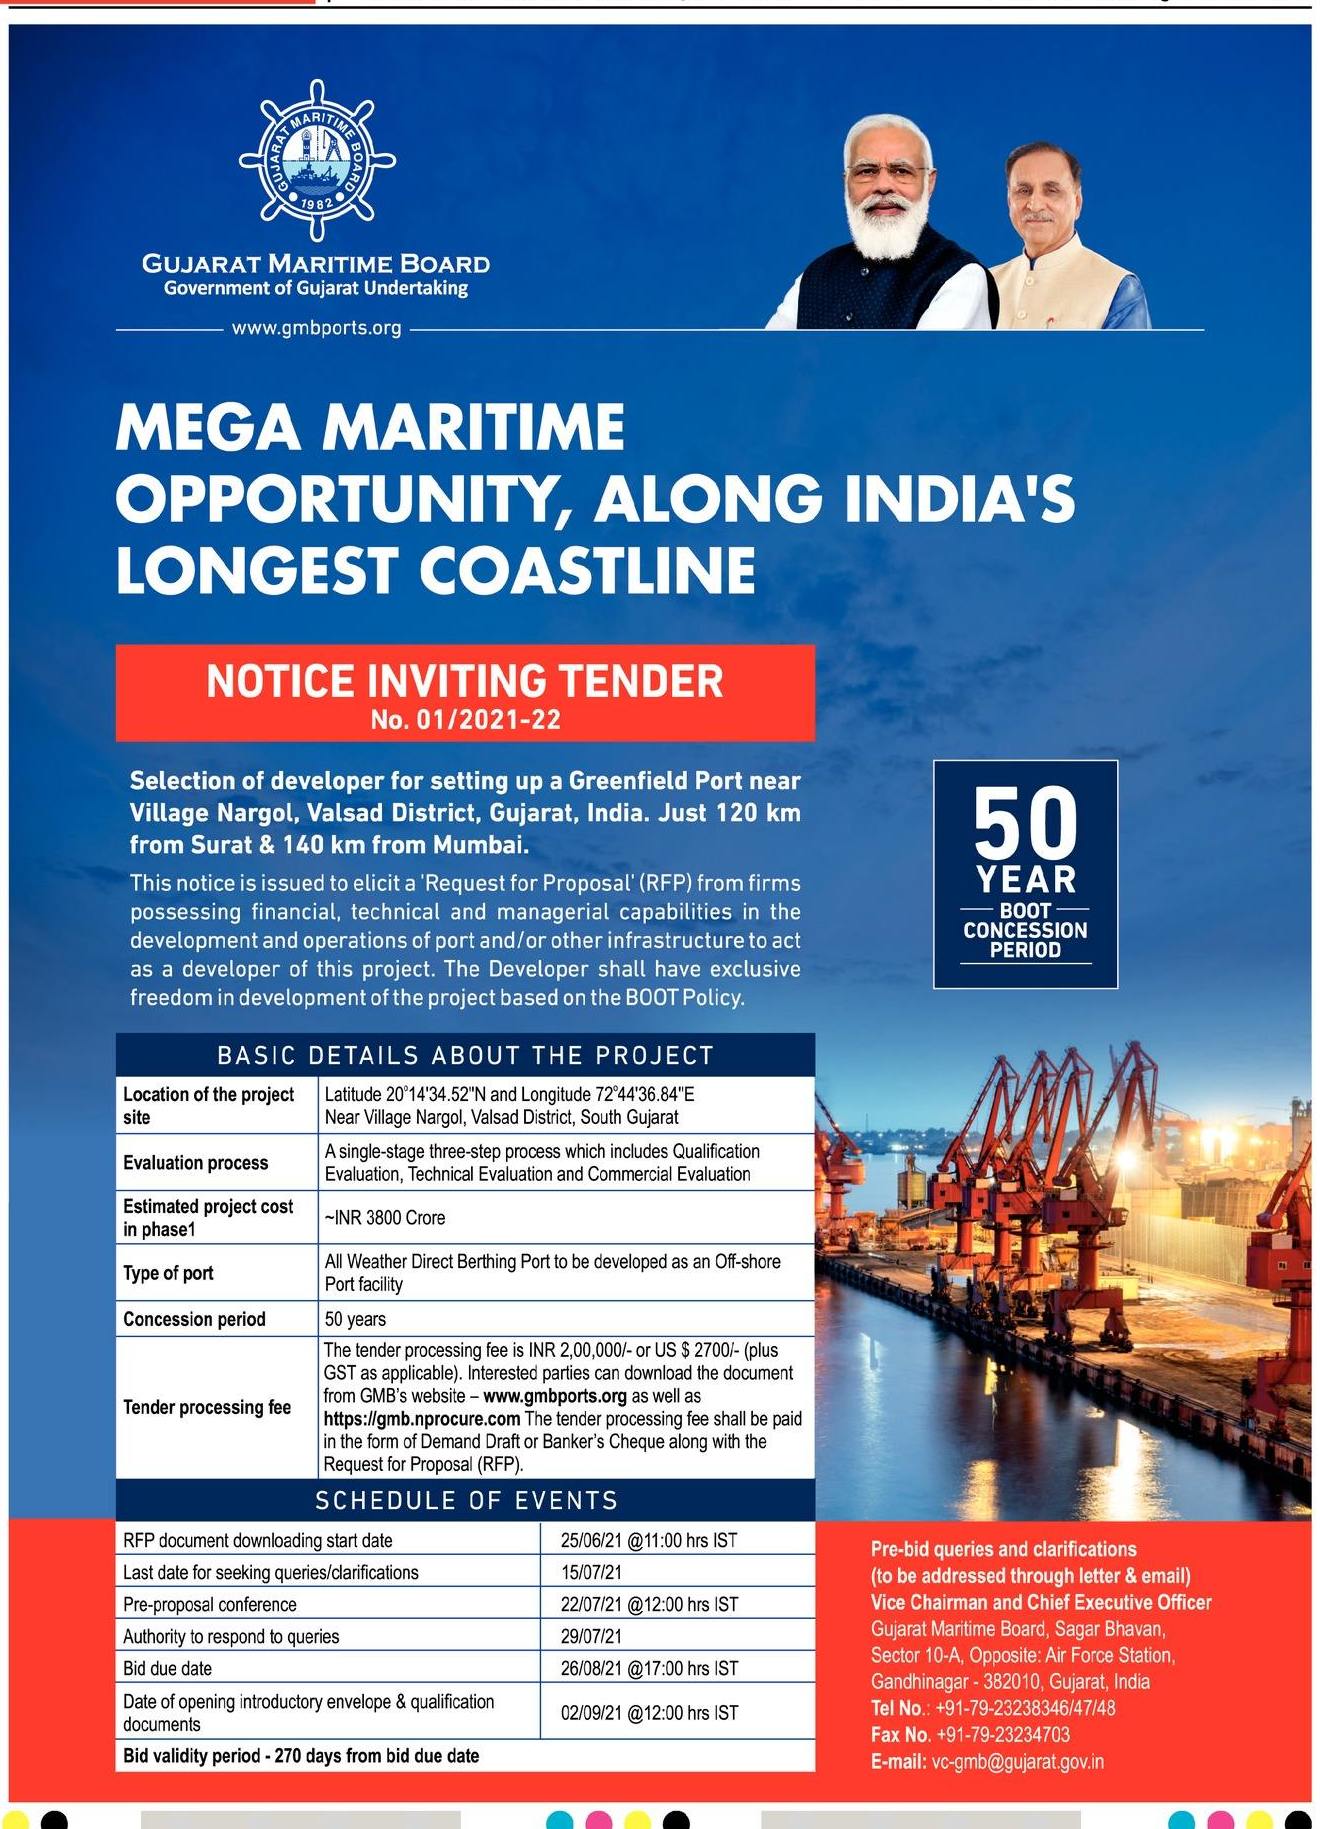 gujarat-maritime-board-mega-maritime-opportunity-along-indias-longest-coastline-ad-gujarat-samachar-ahmedabad-24-06-2021